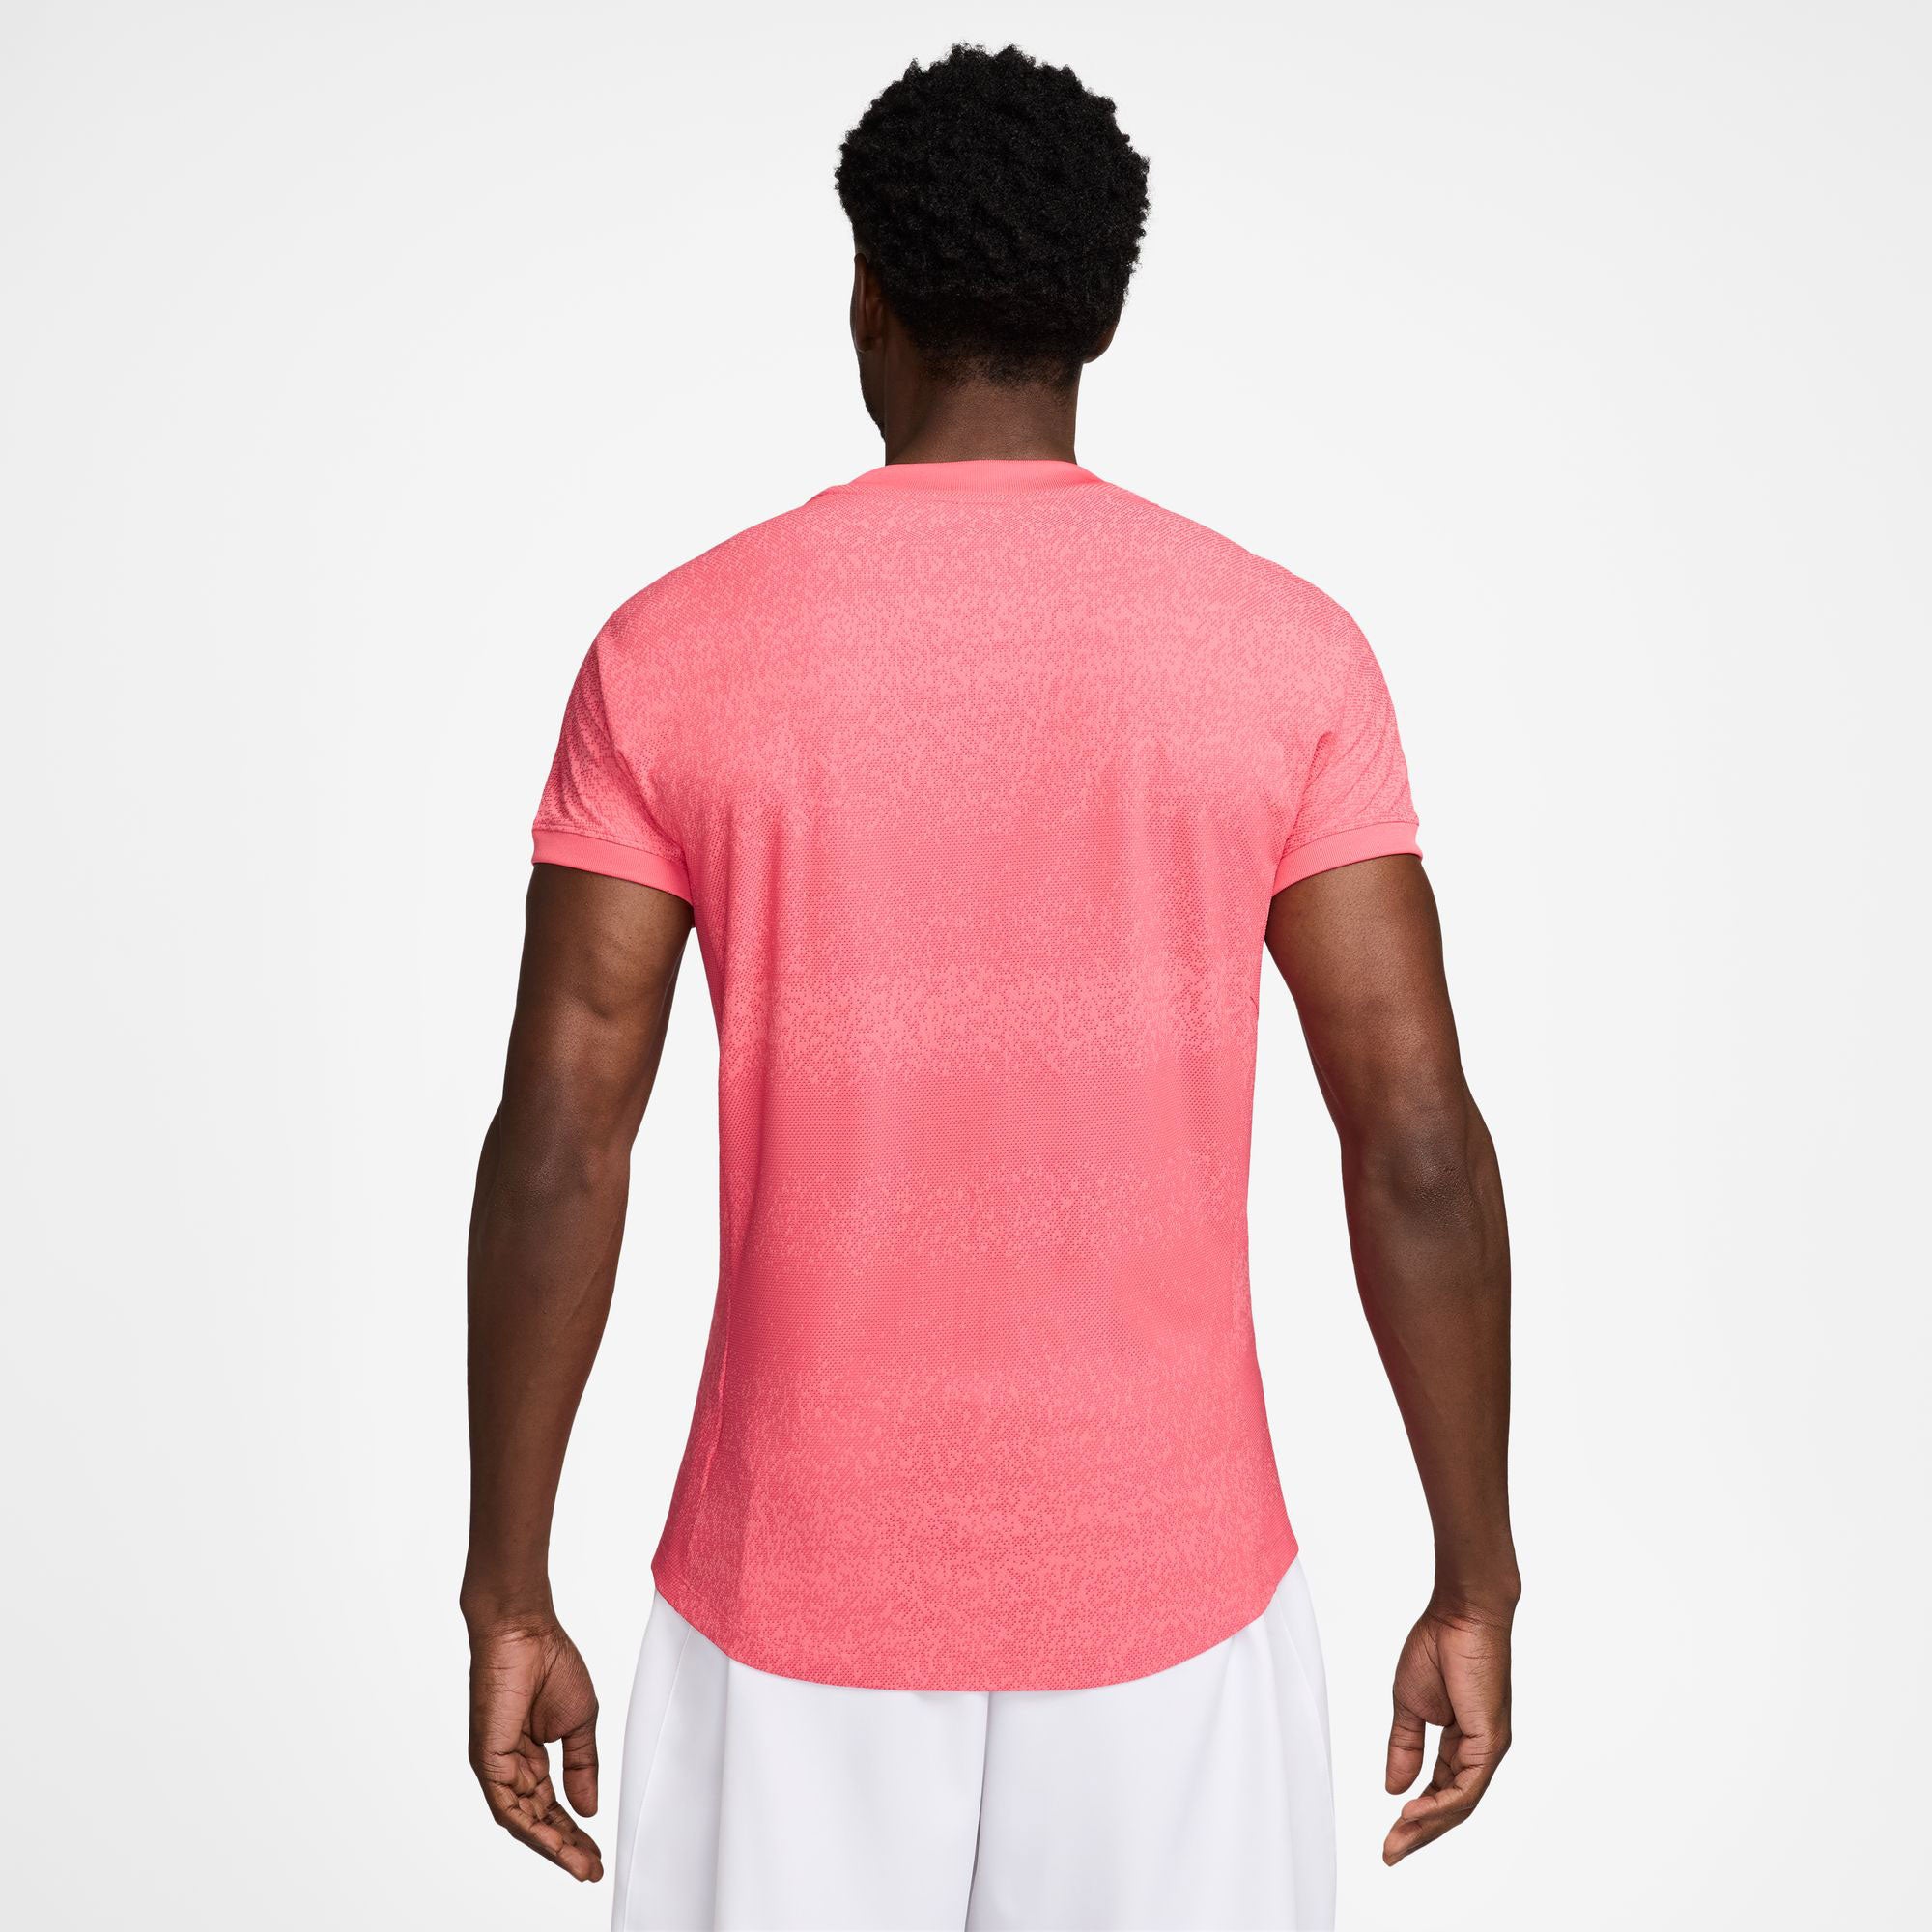 Nike Rafa Men's Dri-FIT ADV Tennis Shirt - Pink (2)